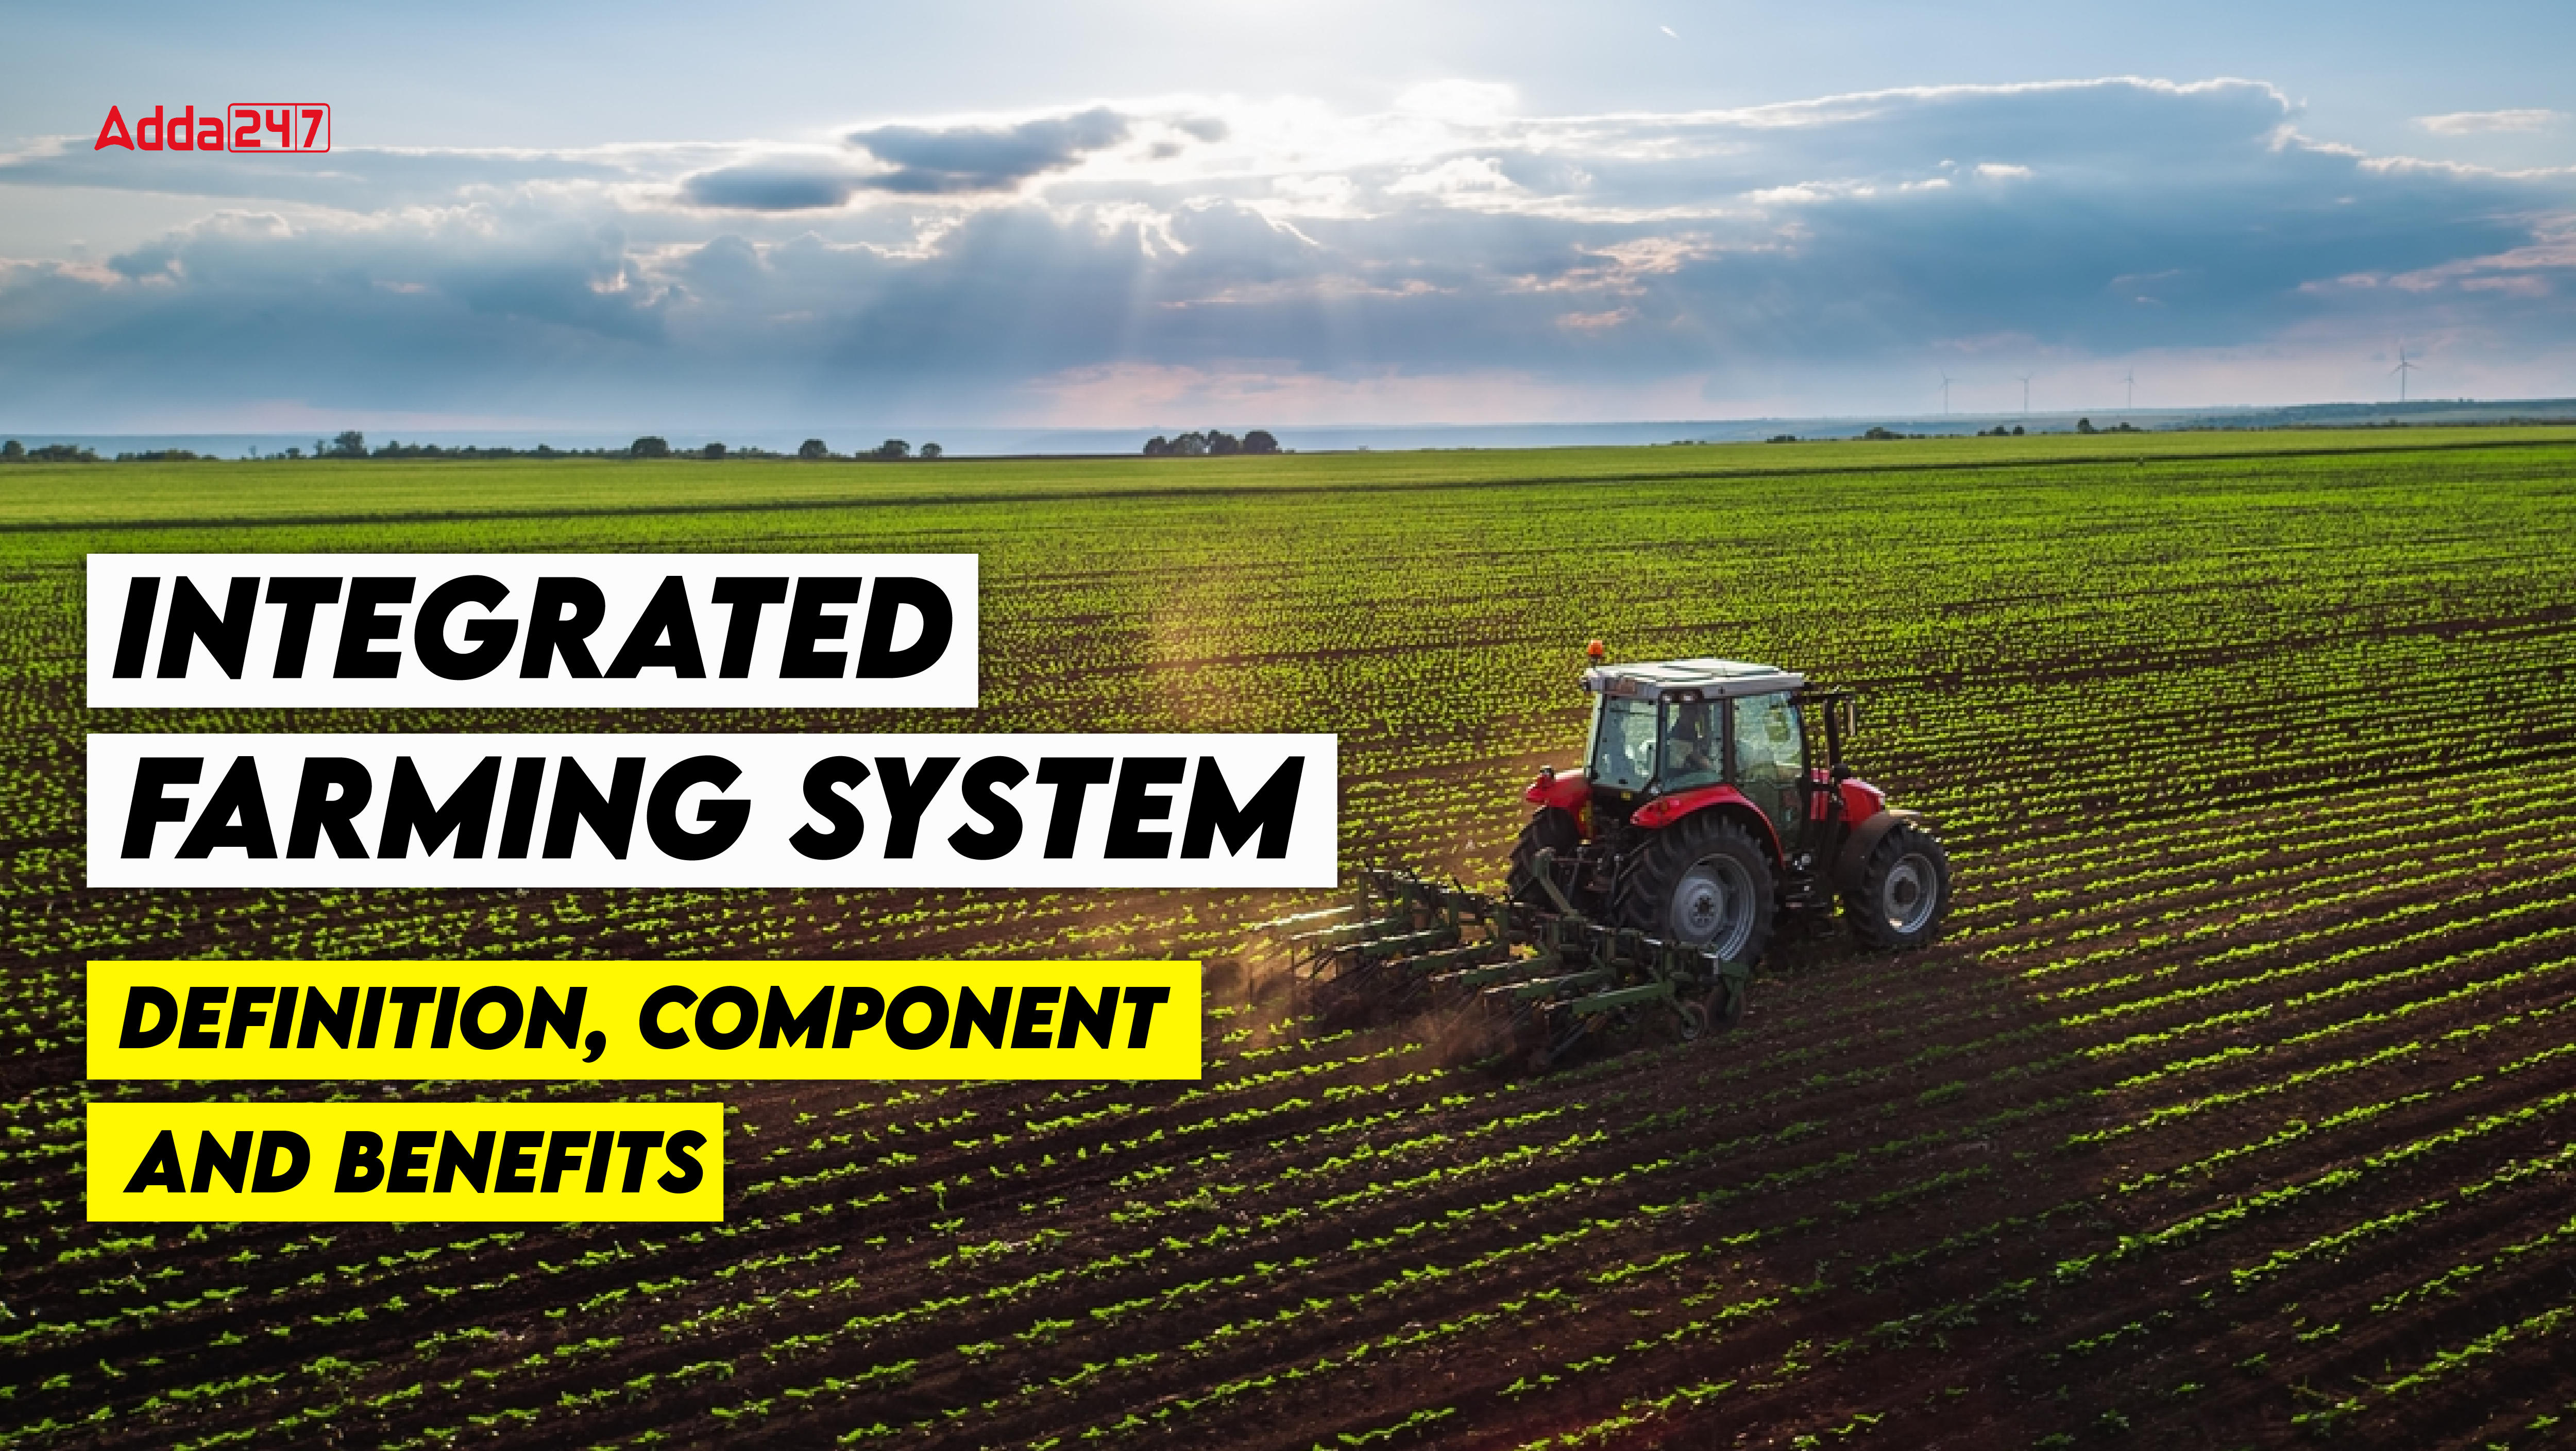 Integrated Farming System